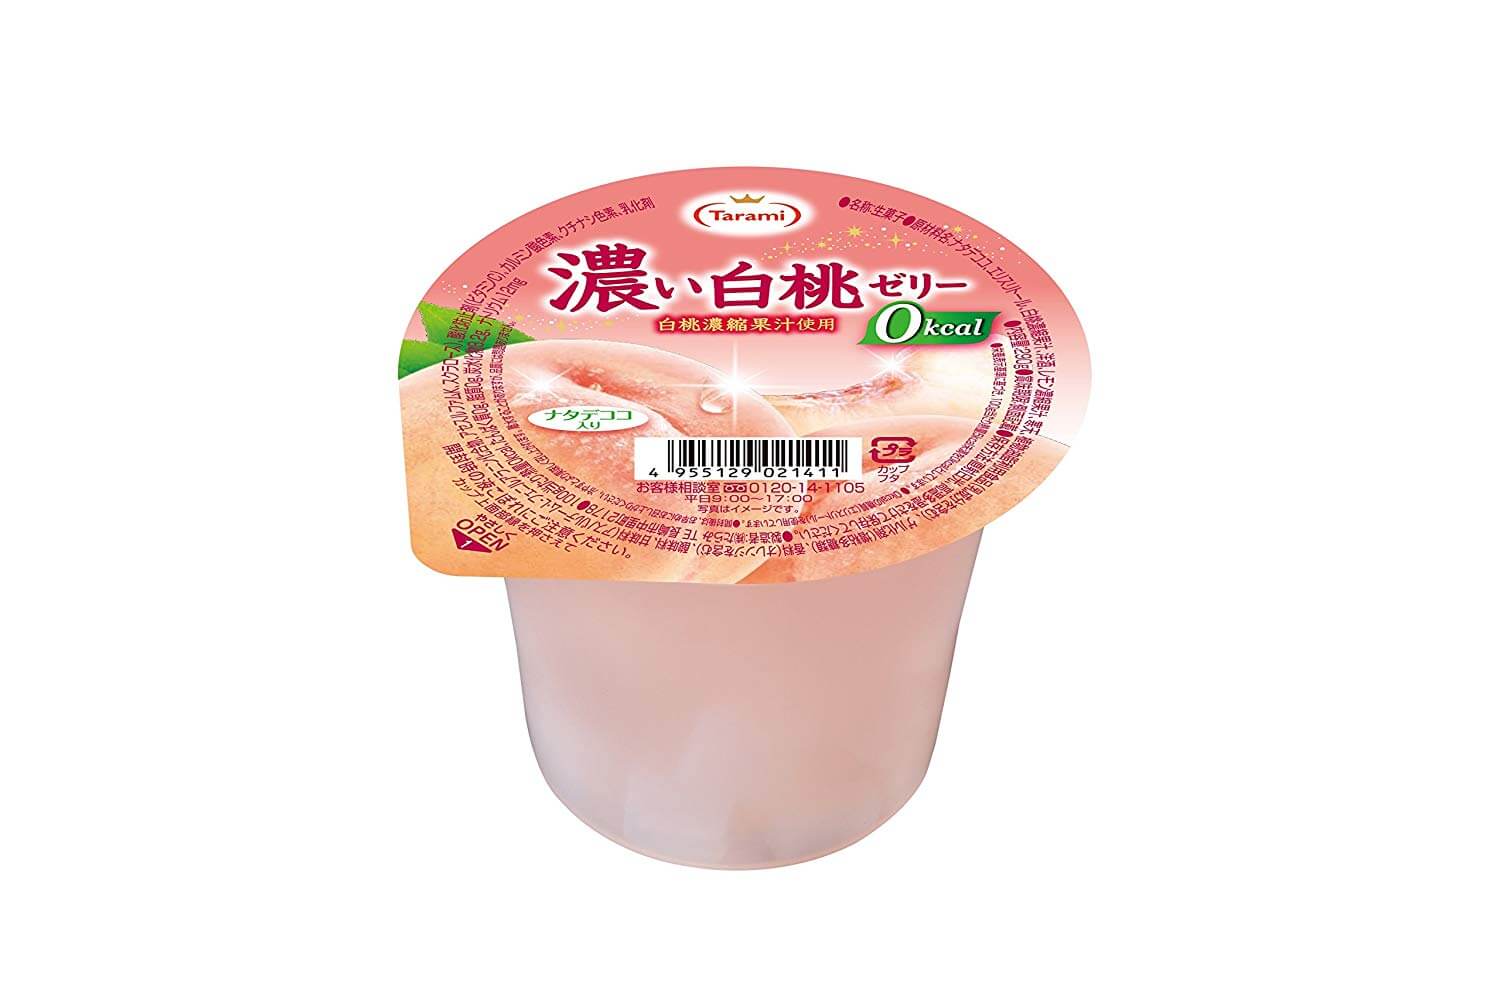 Tarami Fruit Jelly 0kcal 290g Malaysia Japan Online Shopping Hommi